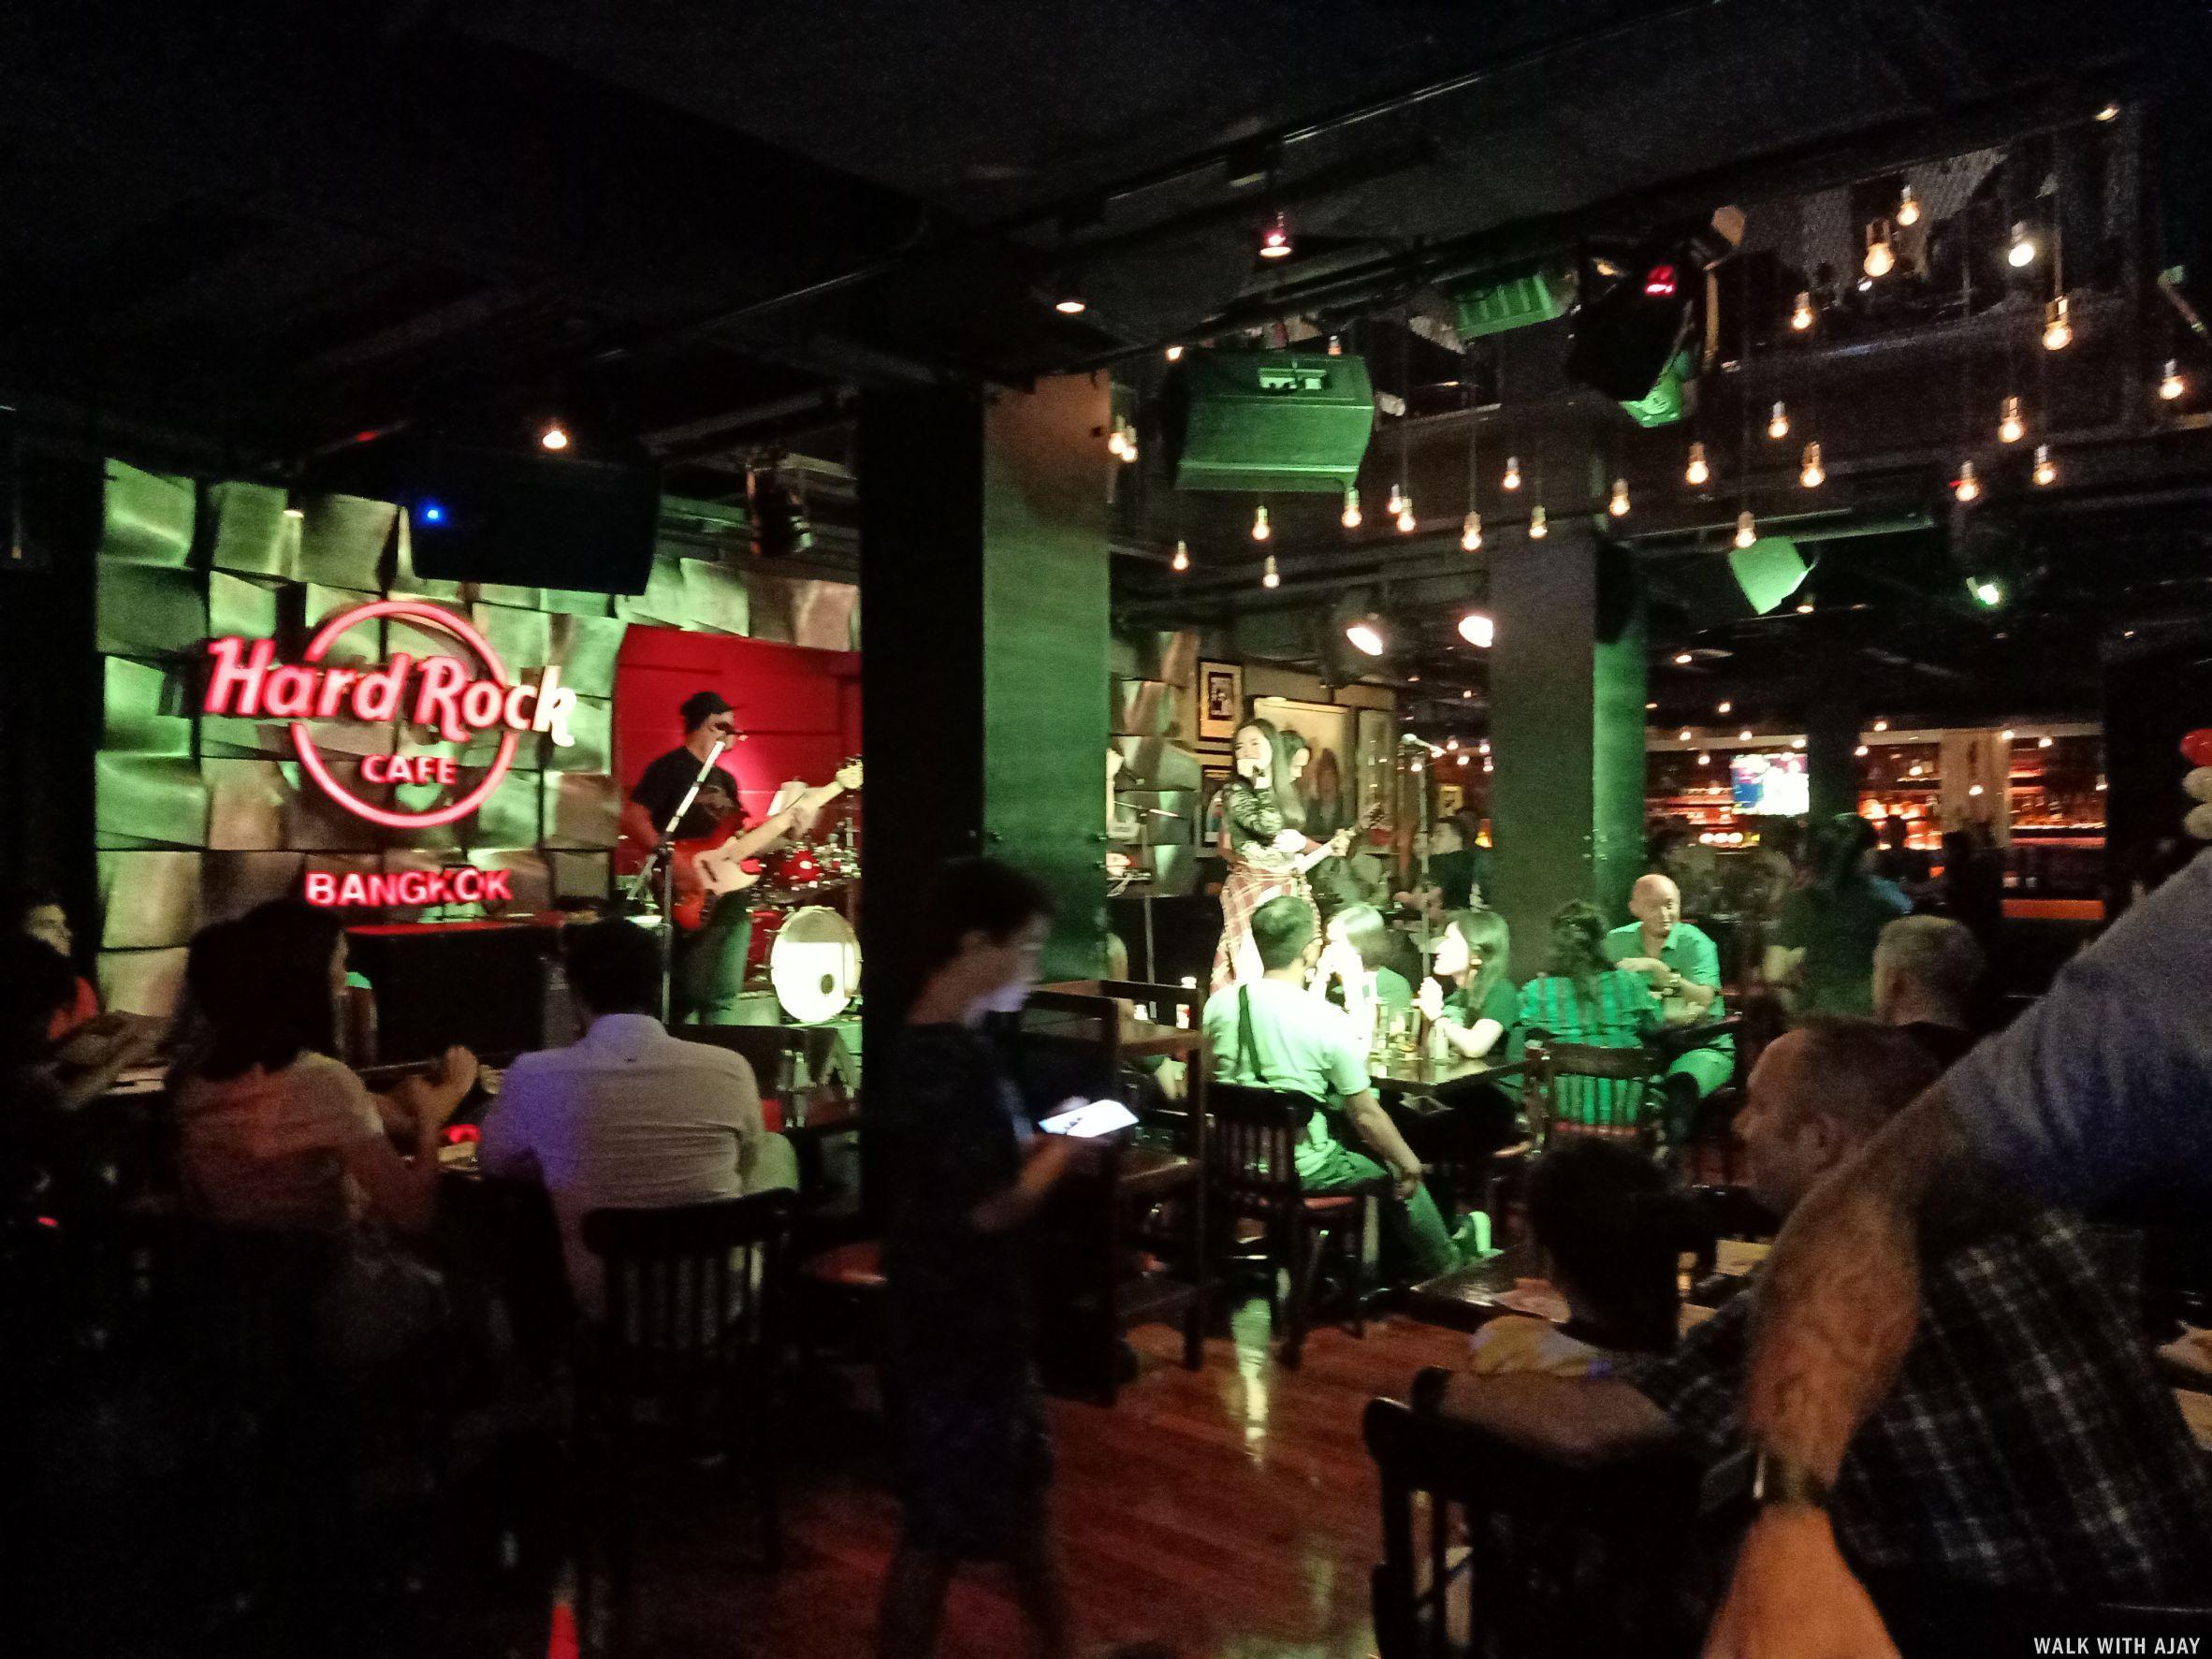 Exploring Hard Rock Cafe & Enjoying Live Band : Bangkok, Thailand (Sep'19) 2